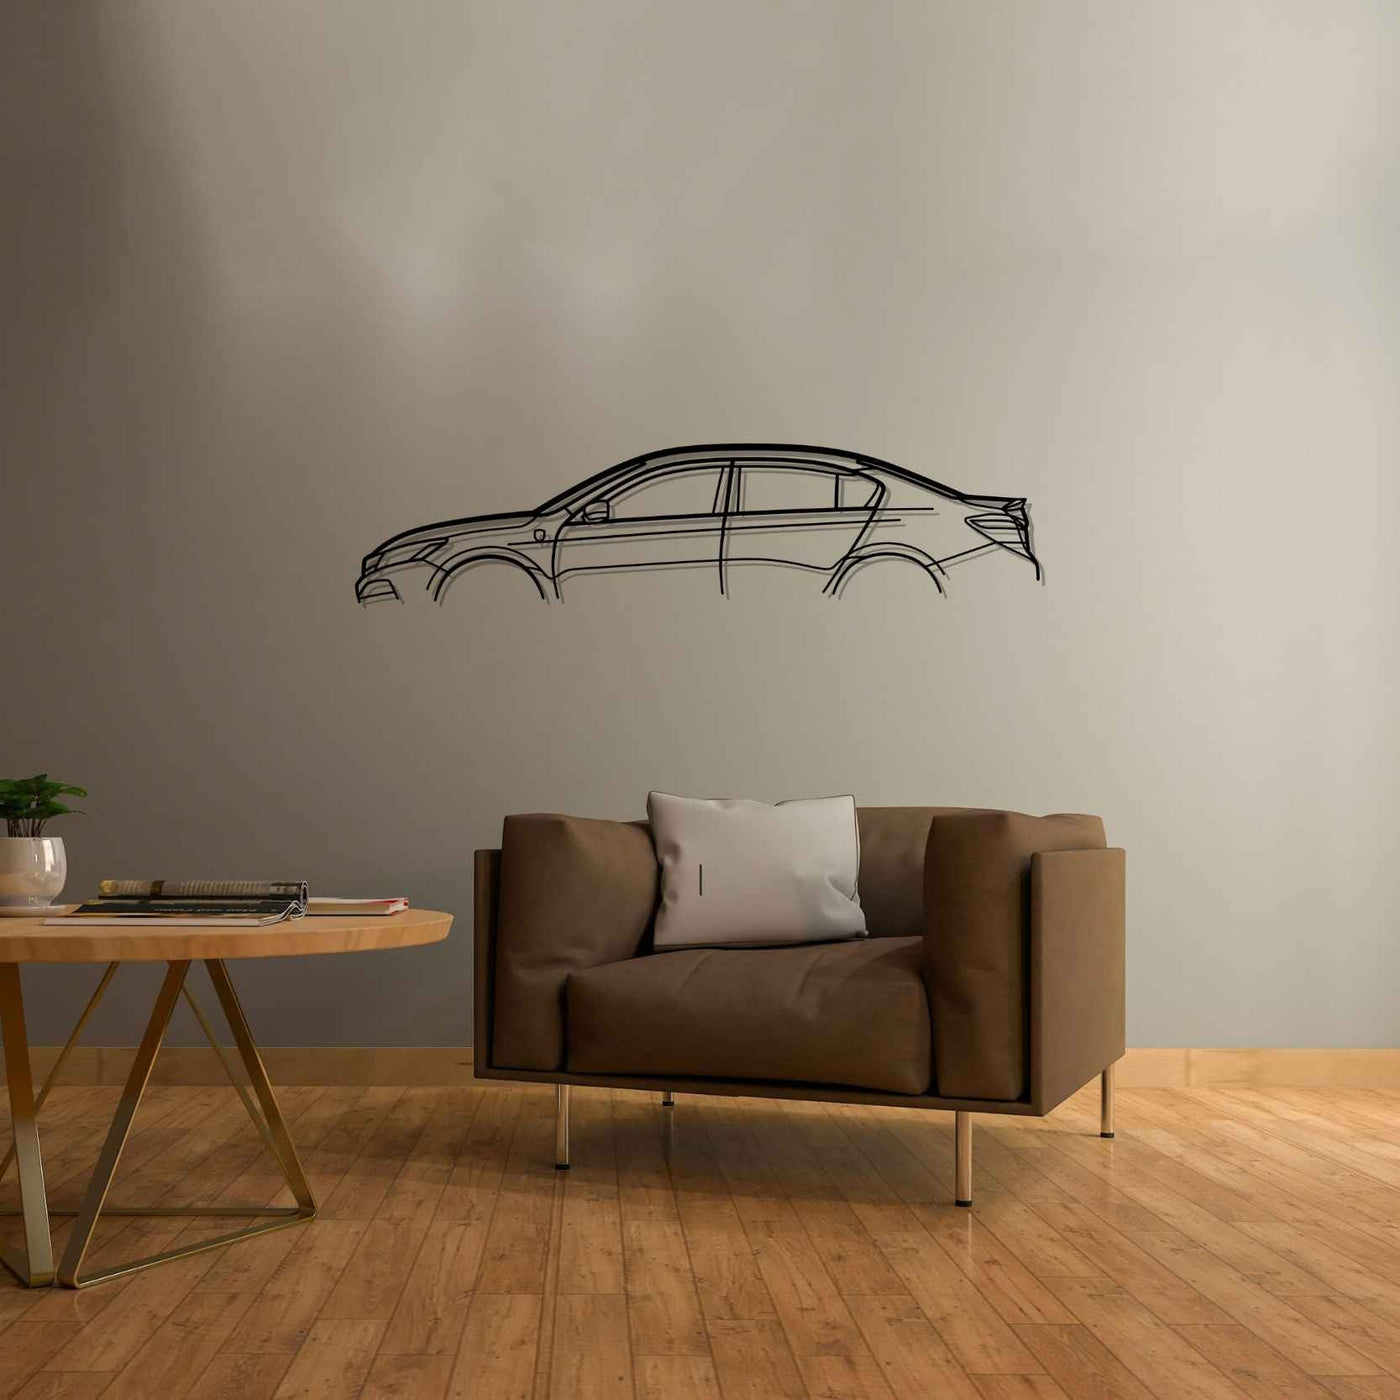 Accord 2016 Sedan Classic Silhouette Metal Wall Art